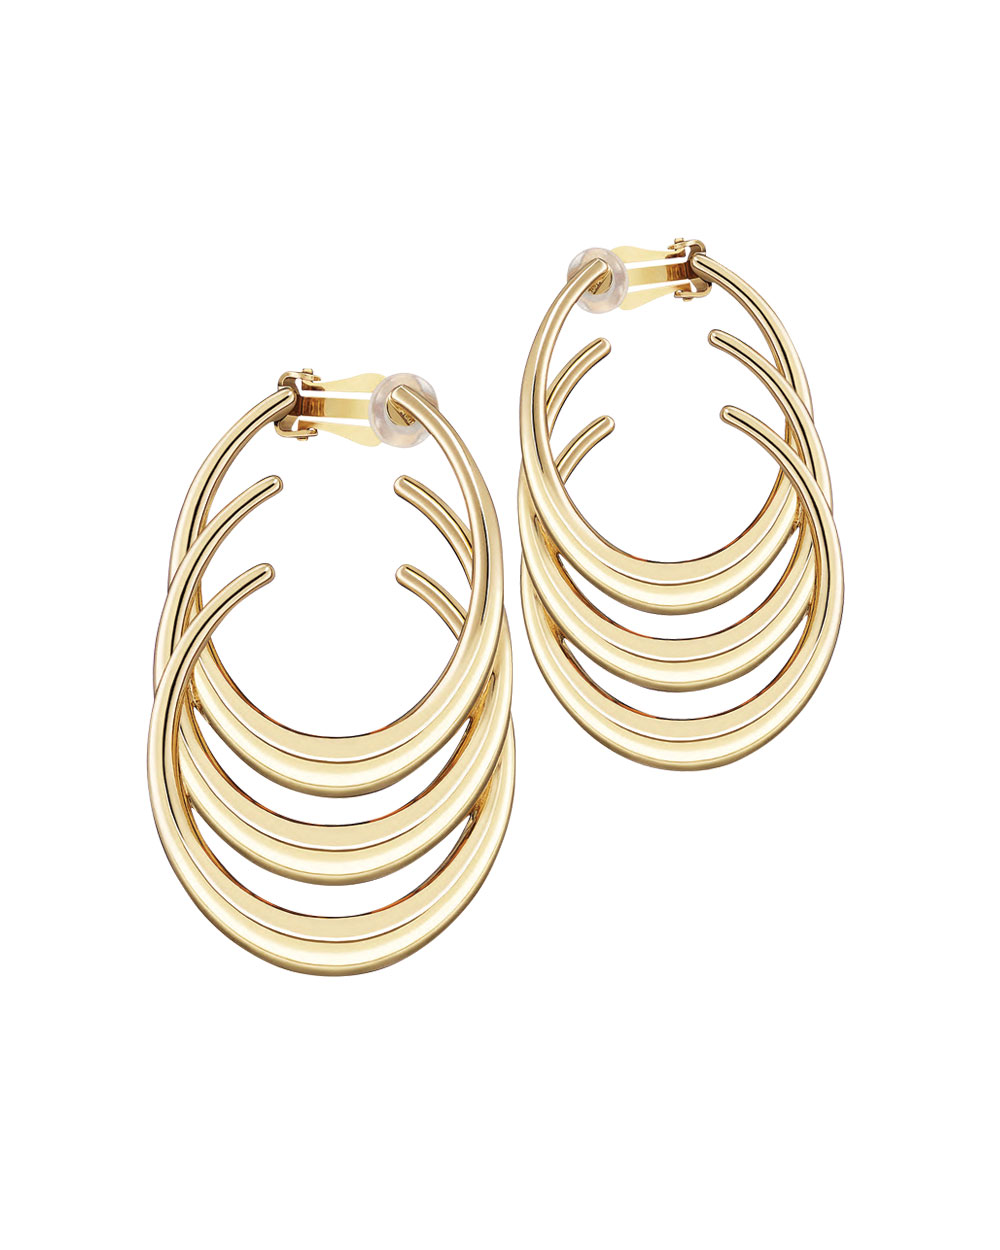 Christian Dior earrings, $1150